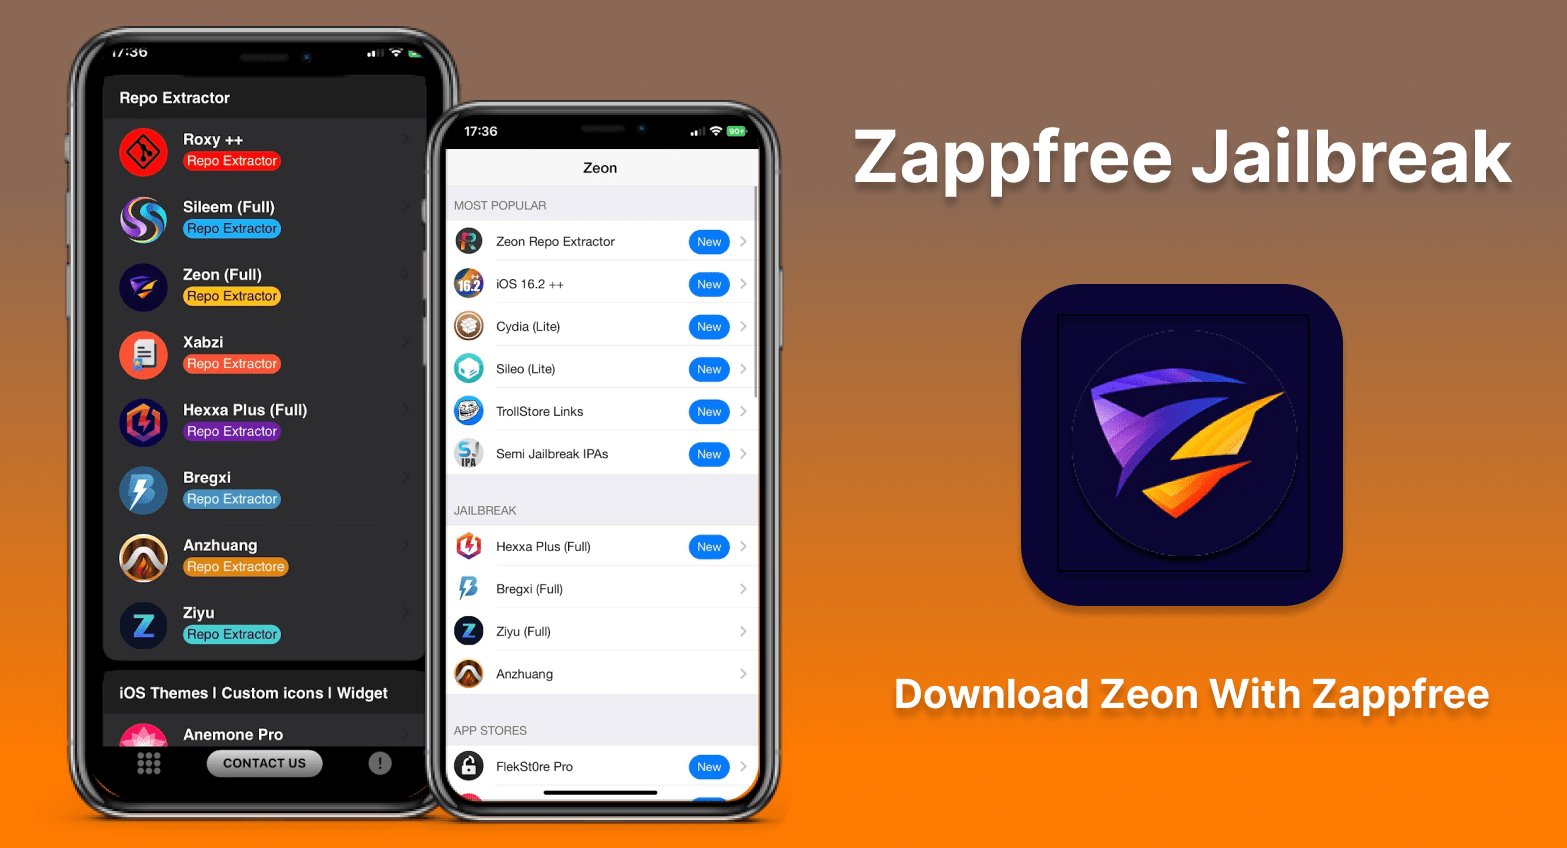 Download Zeon with Zappfree